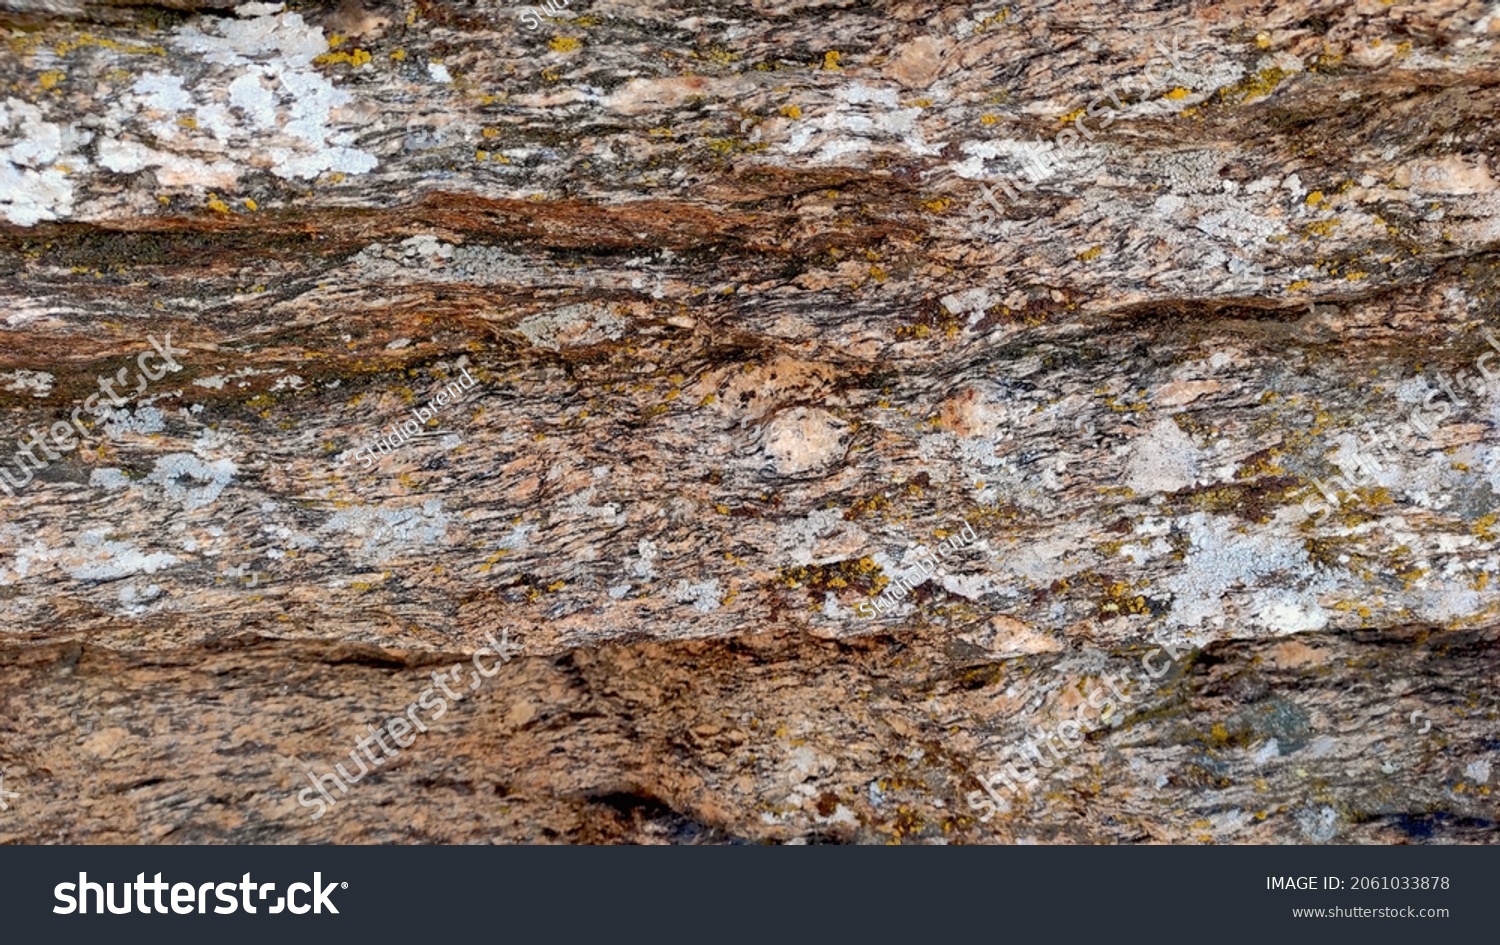 Sedimentary Rock Texture Texture Large Rock Stock Photo 2061033878